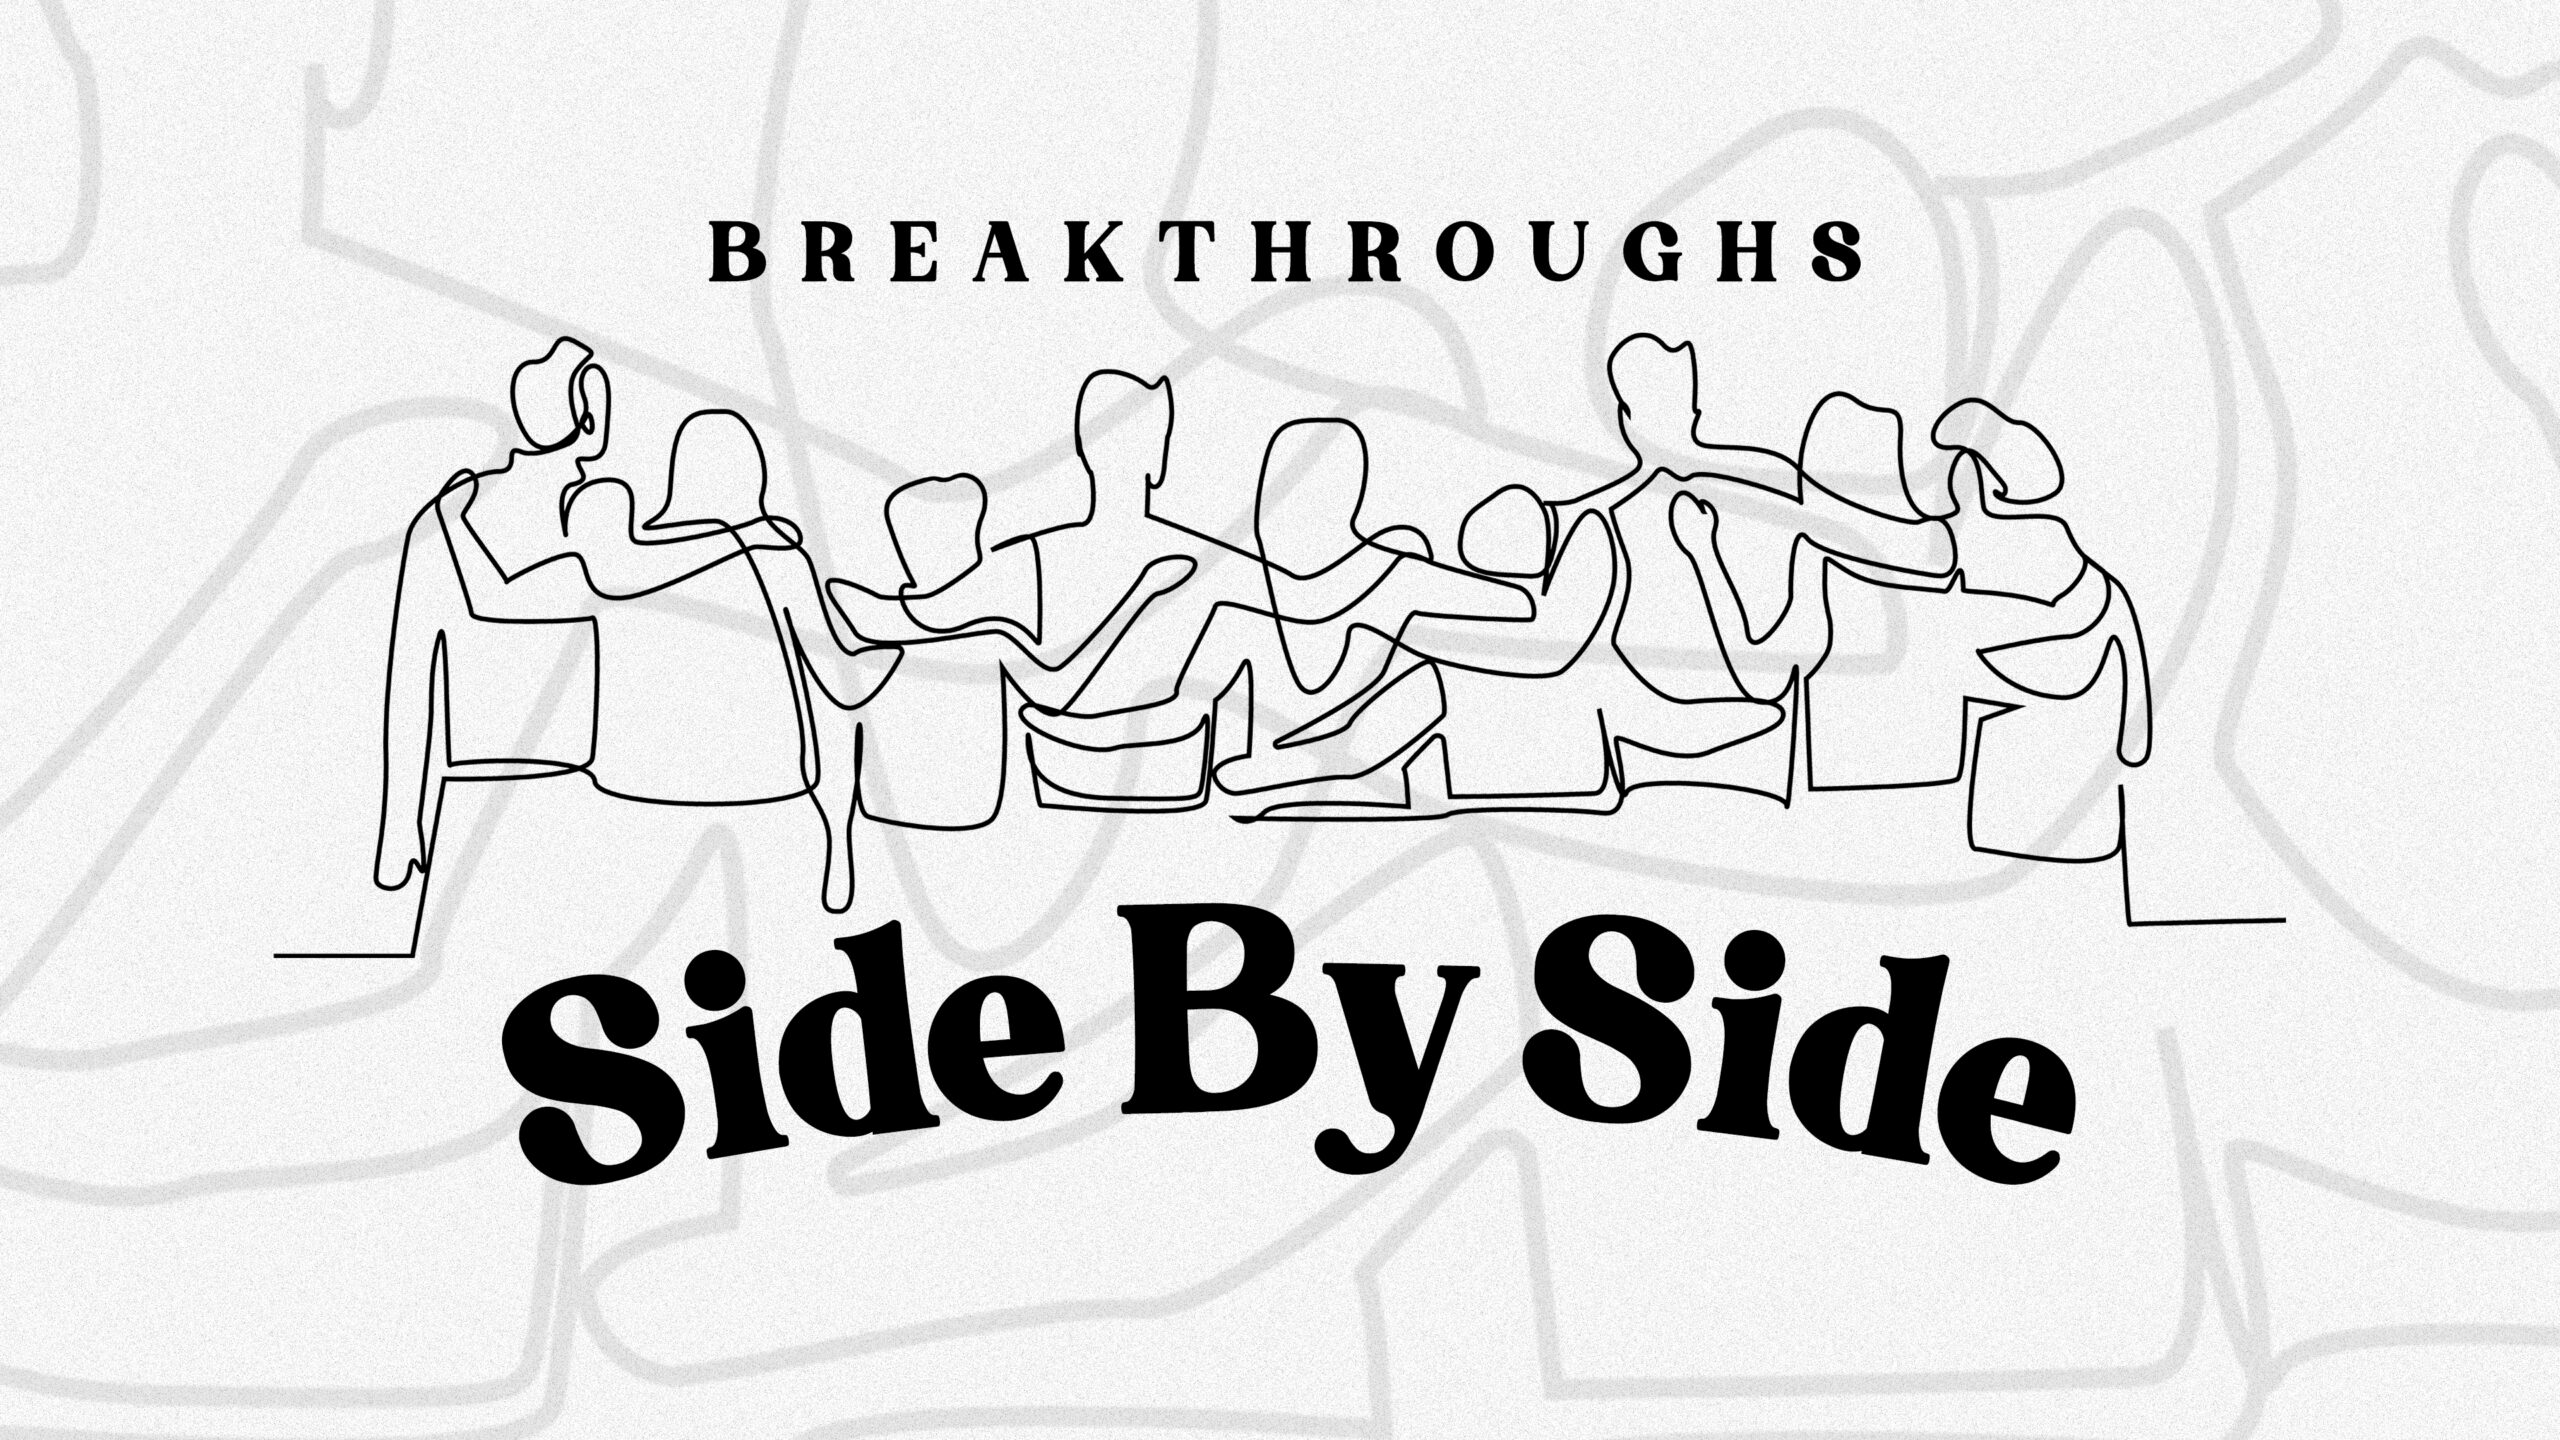 Breakthroughs Side By Side